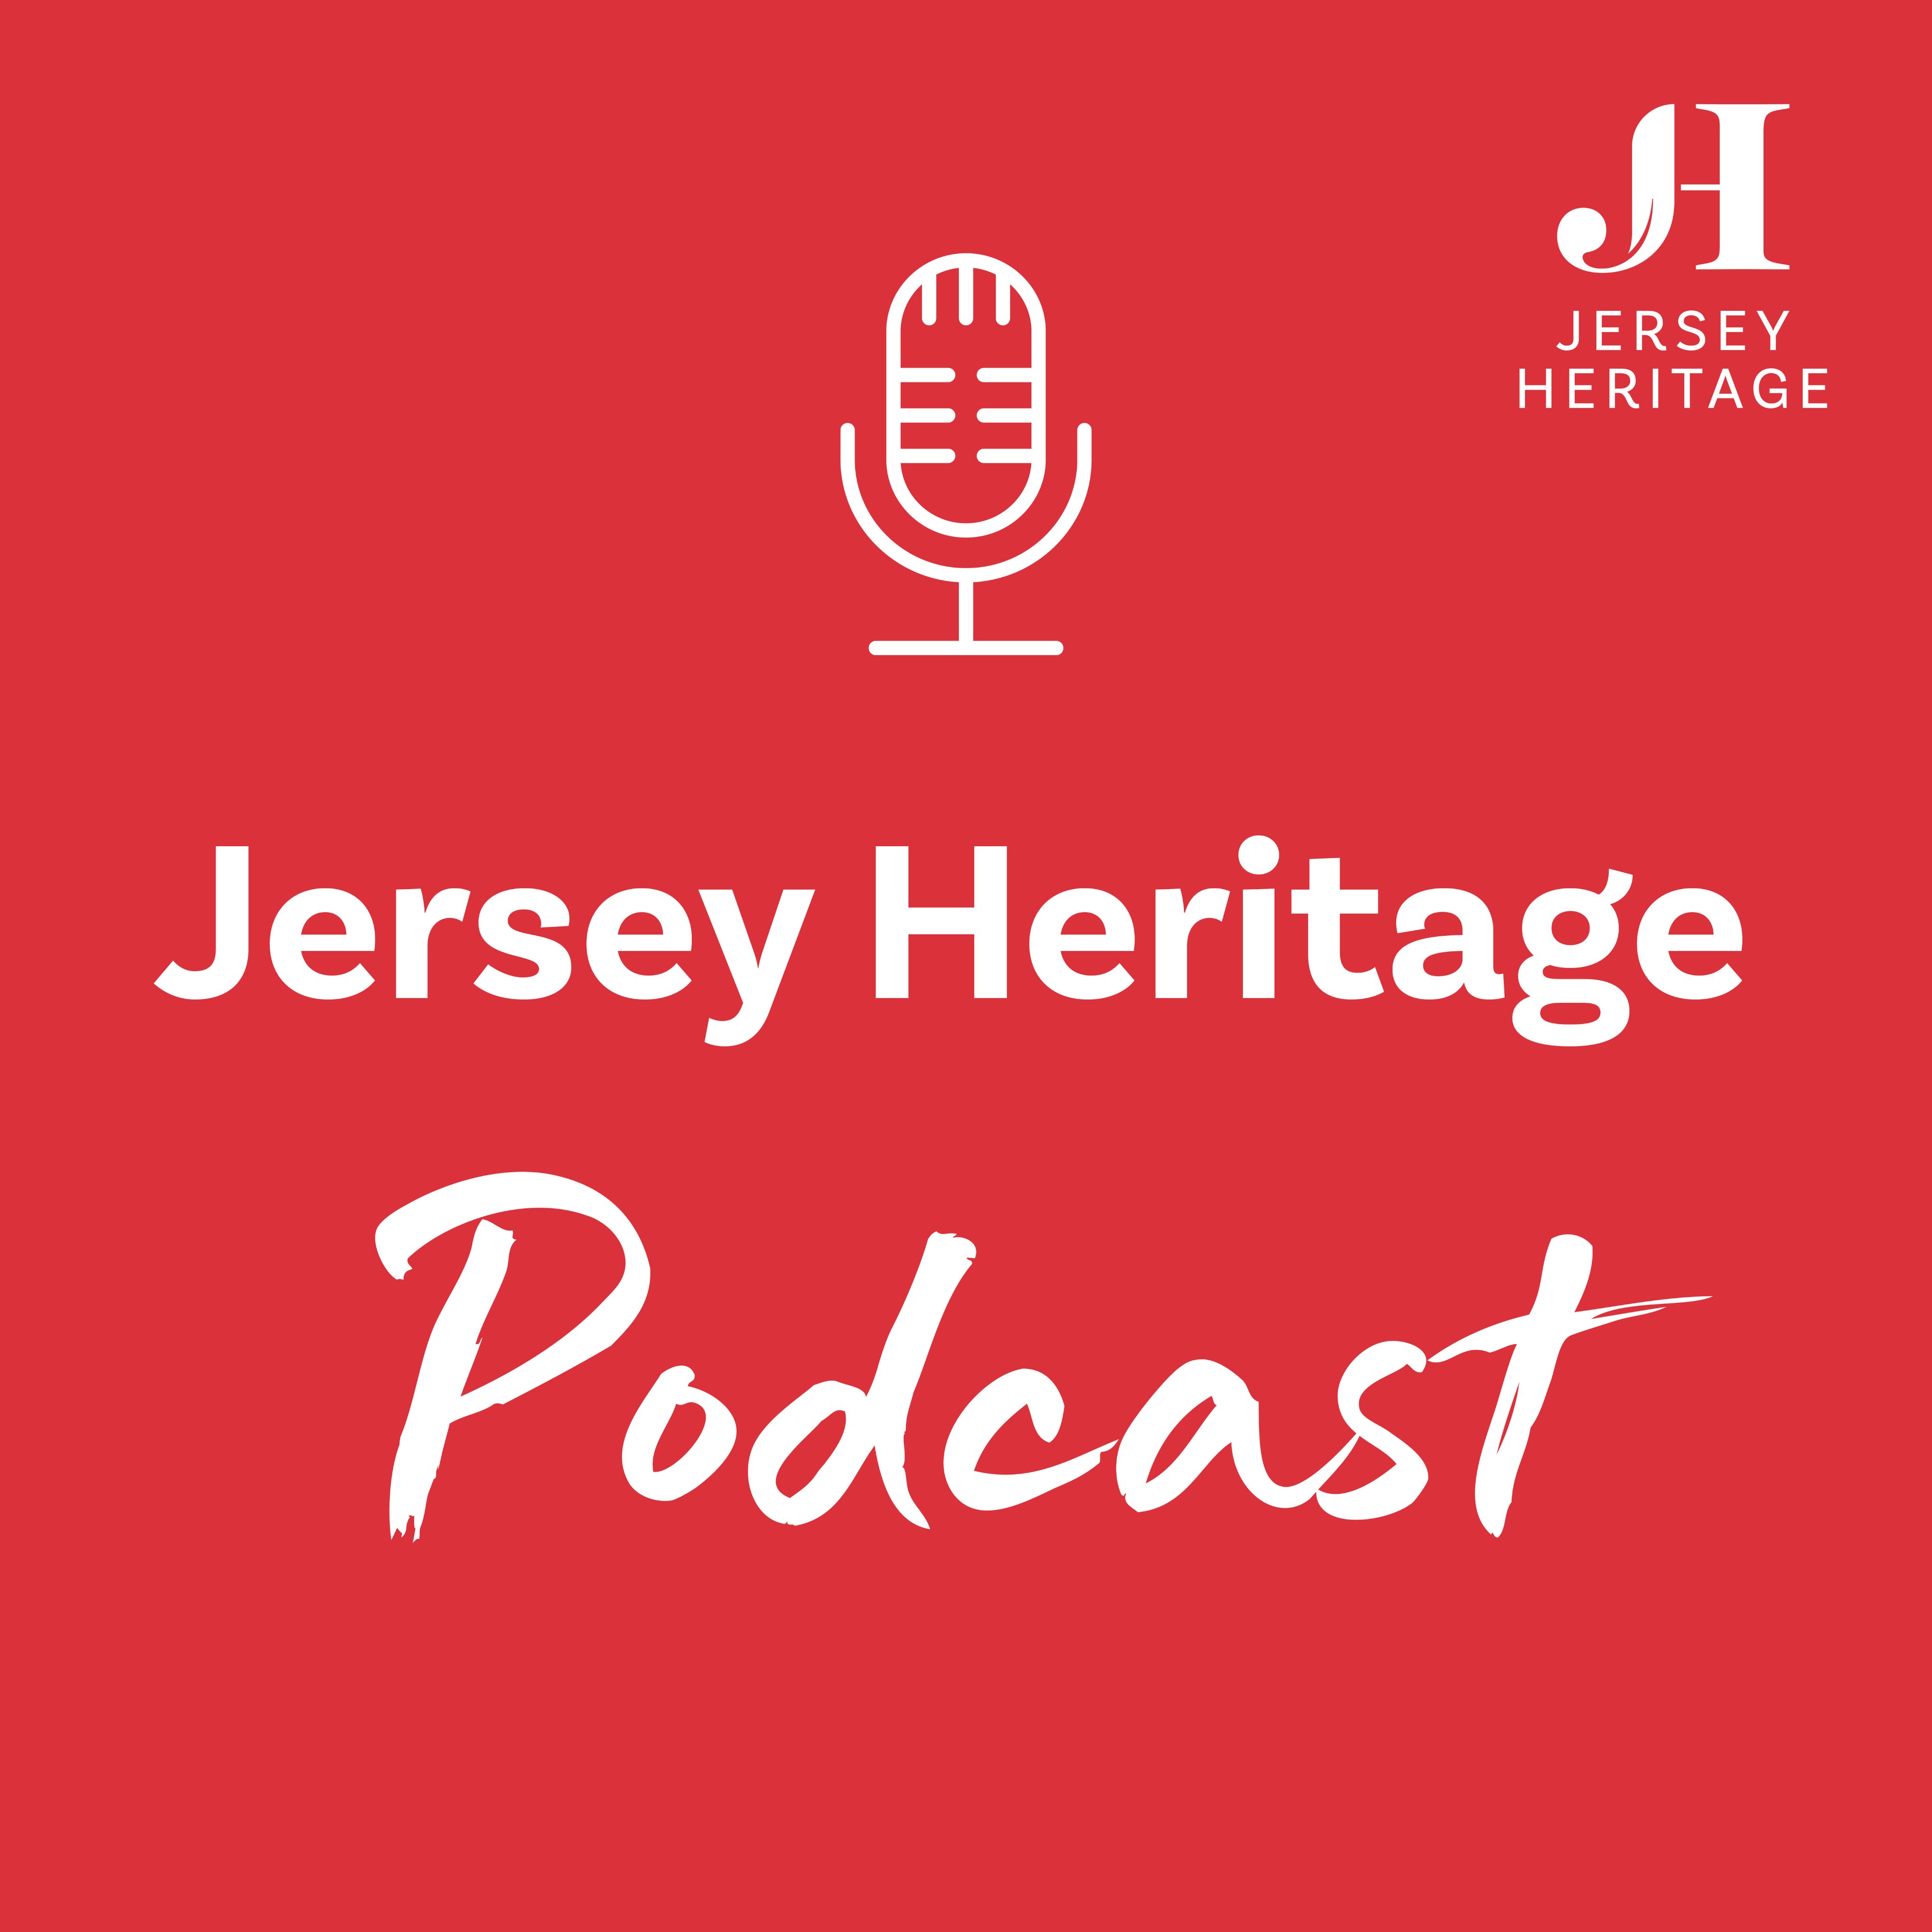 Heritage Jersey Organization